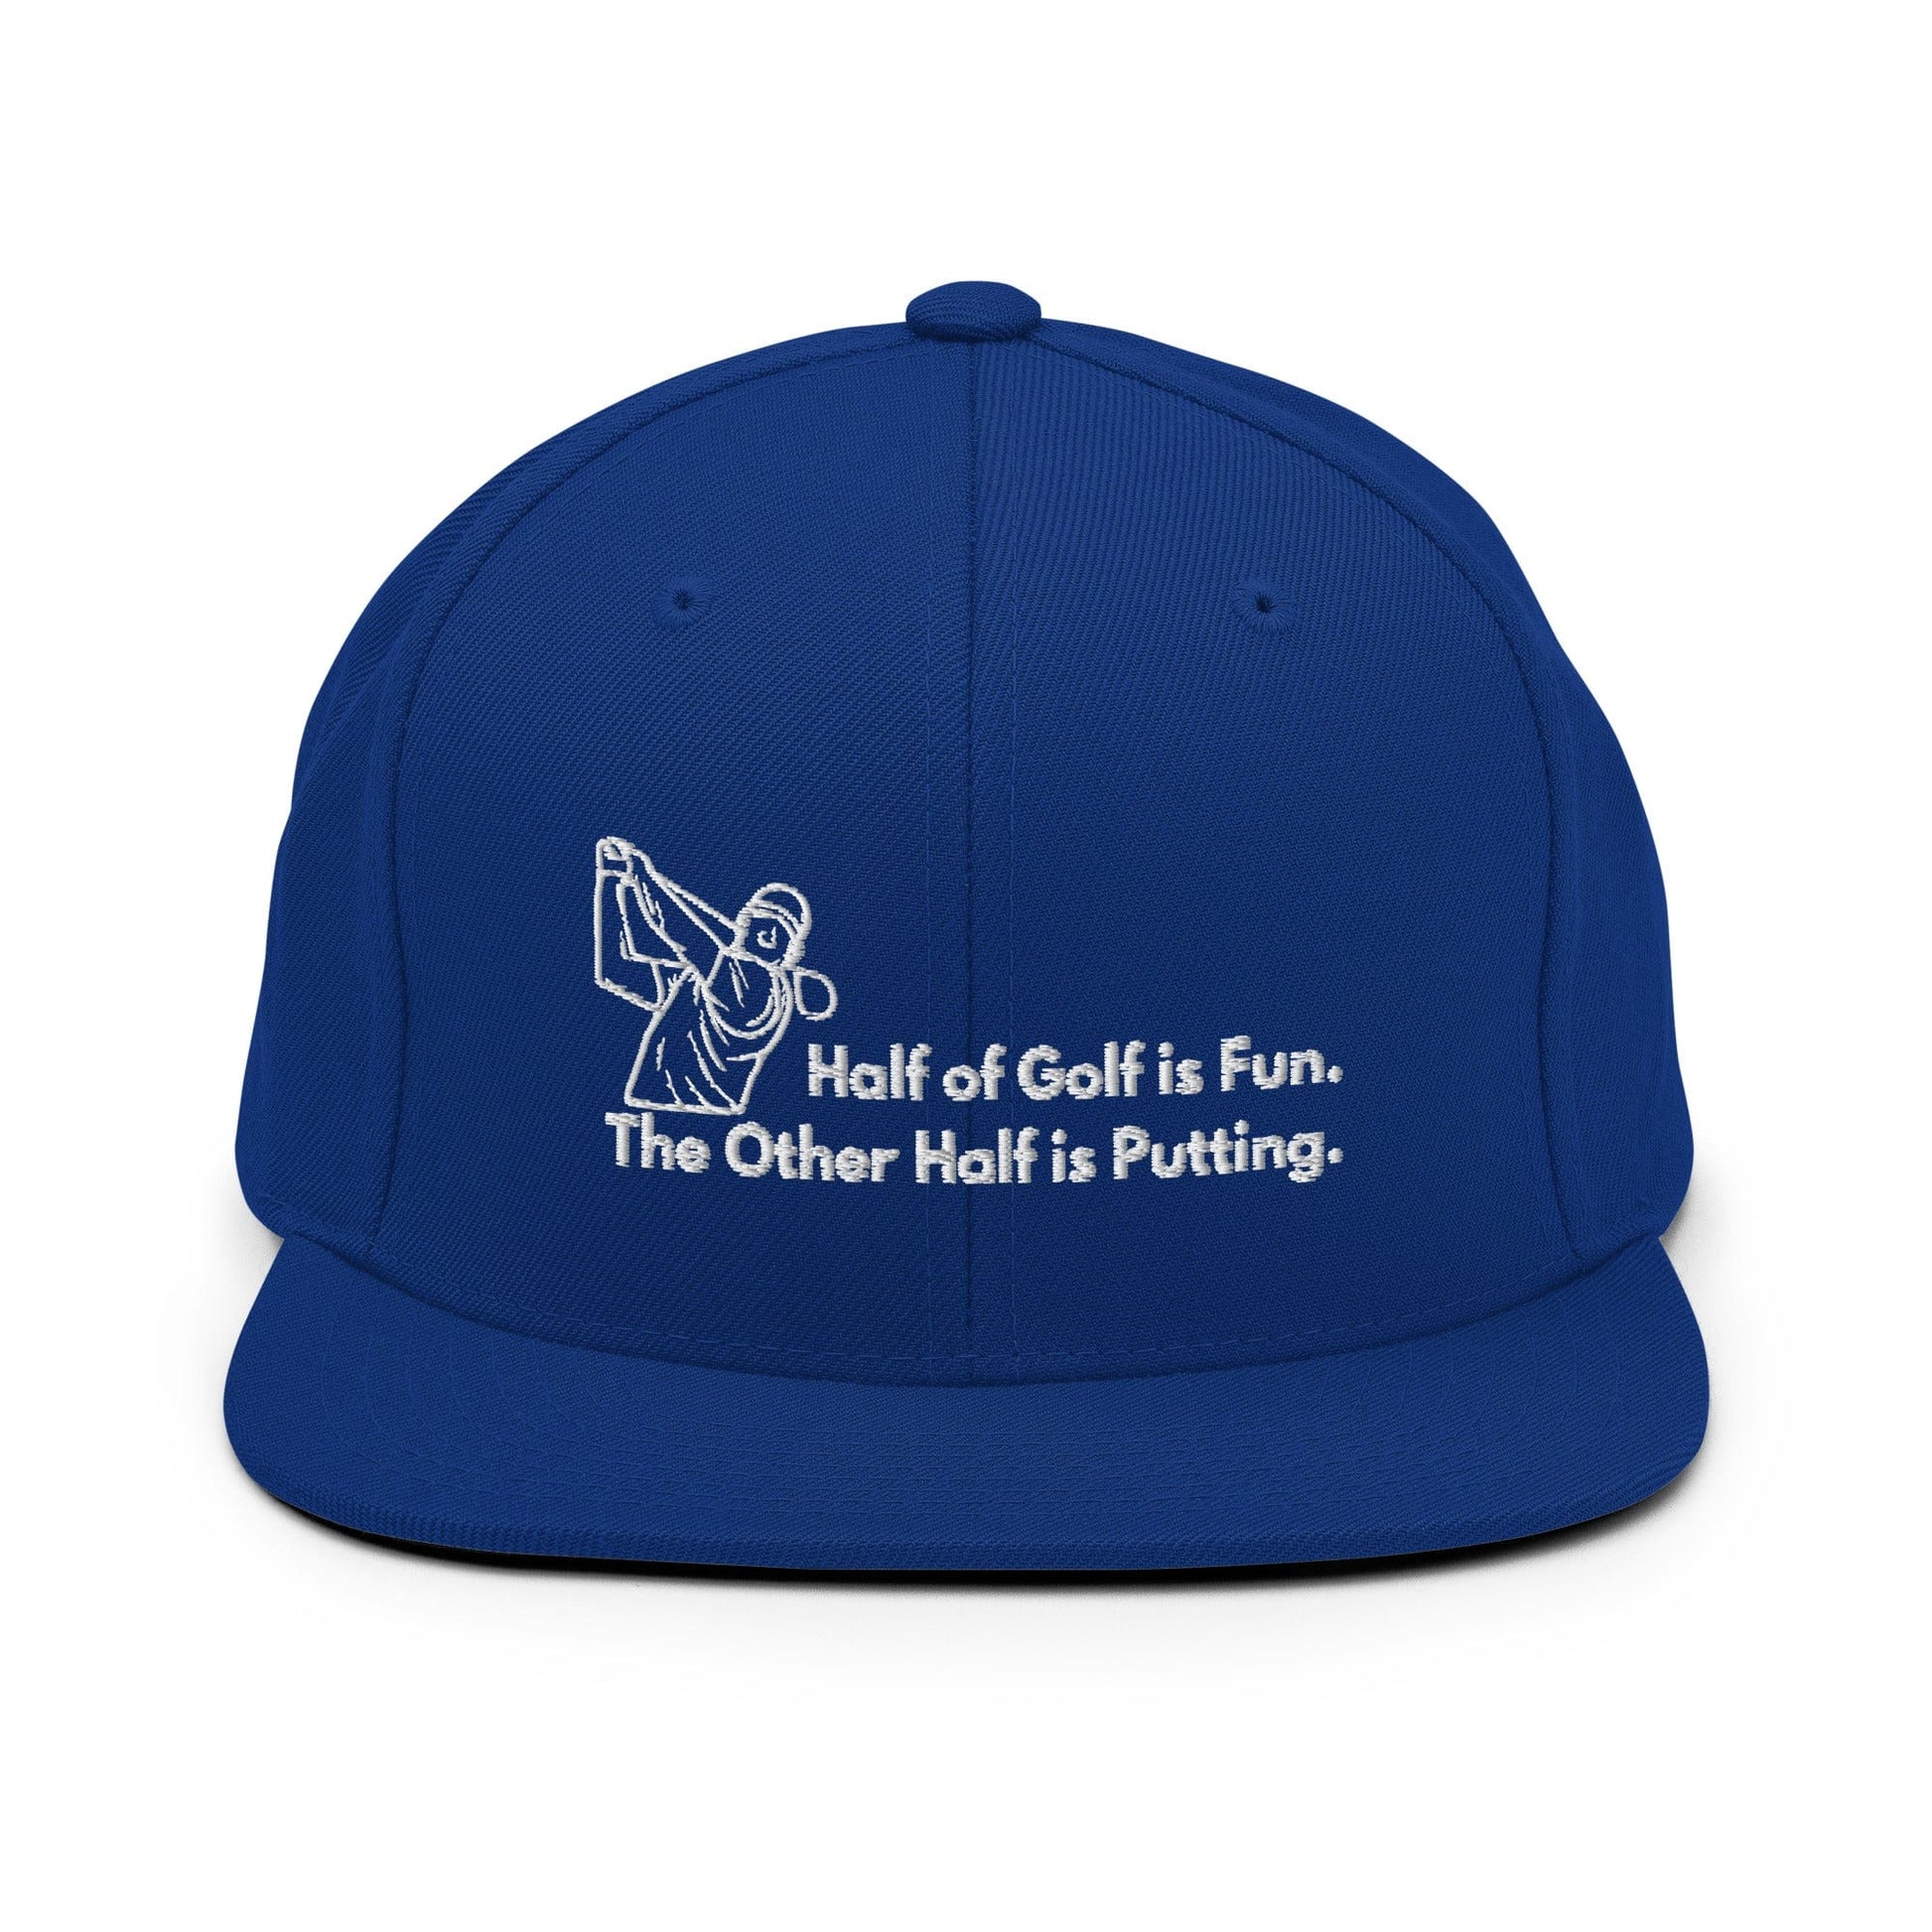 Funny Golfer Gifts  Snapback Hat Royal Blue Half of Golf is Fun Snapback Hat